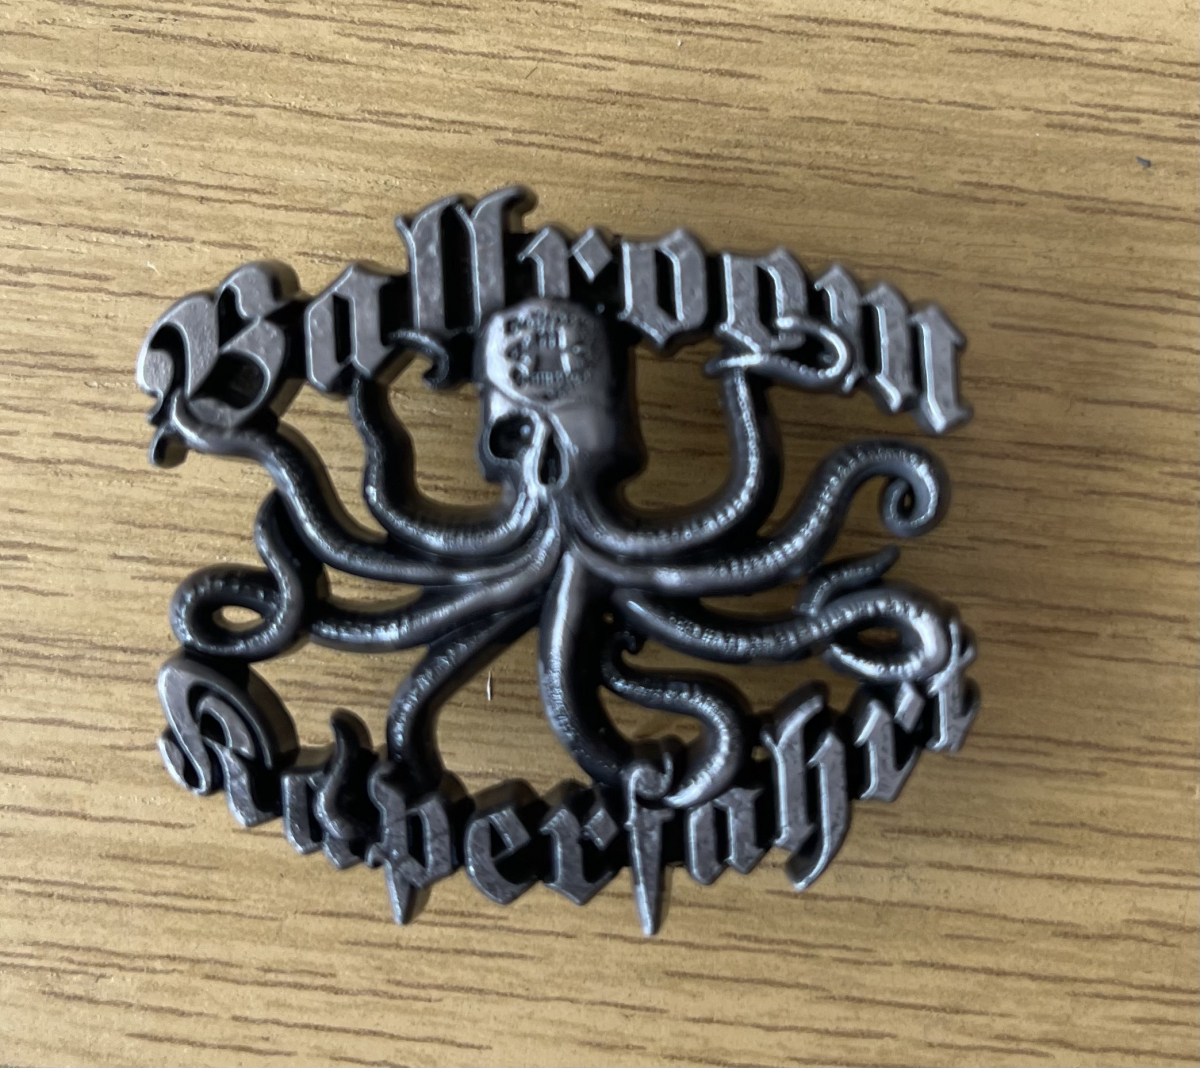 BALLROOM KAPERFAHRT 3D Metal Pin